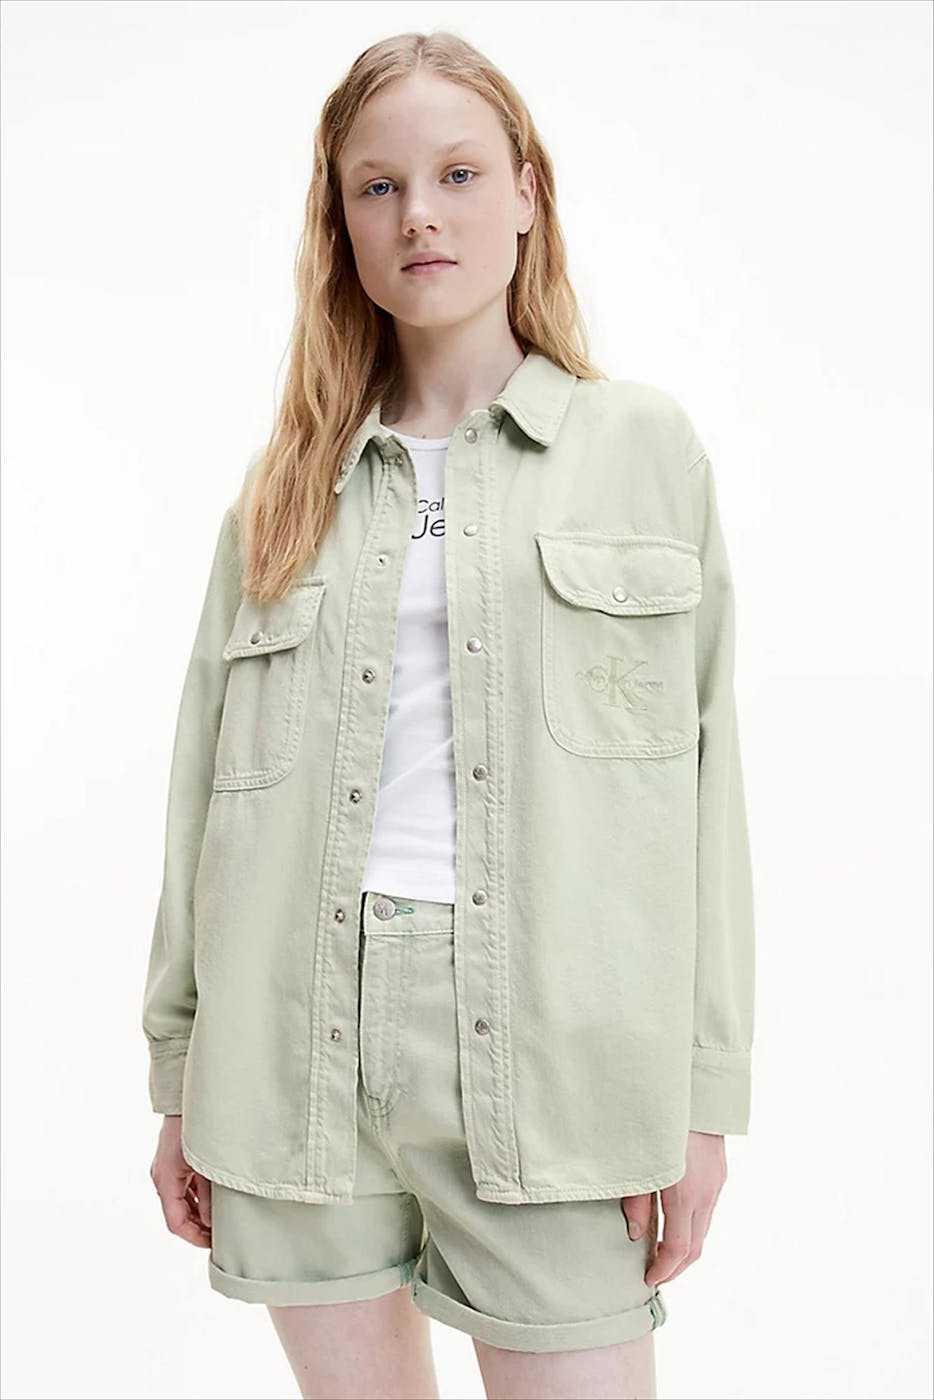 Calvin Klein Jeans - Lichtgroene Shirt Jacket overshirt